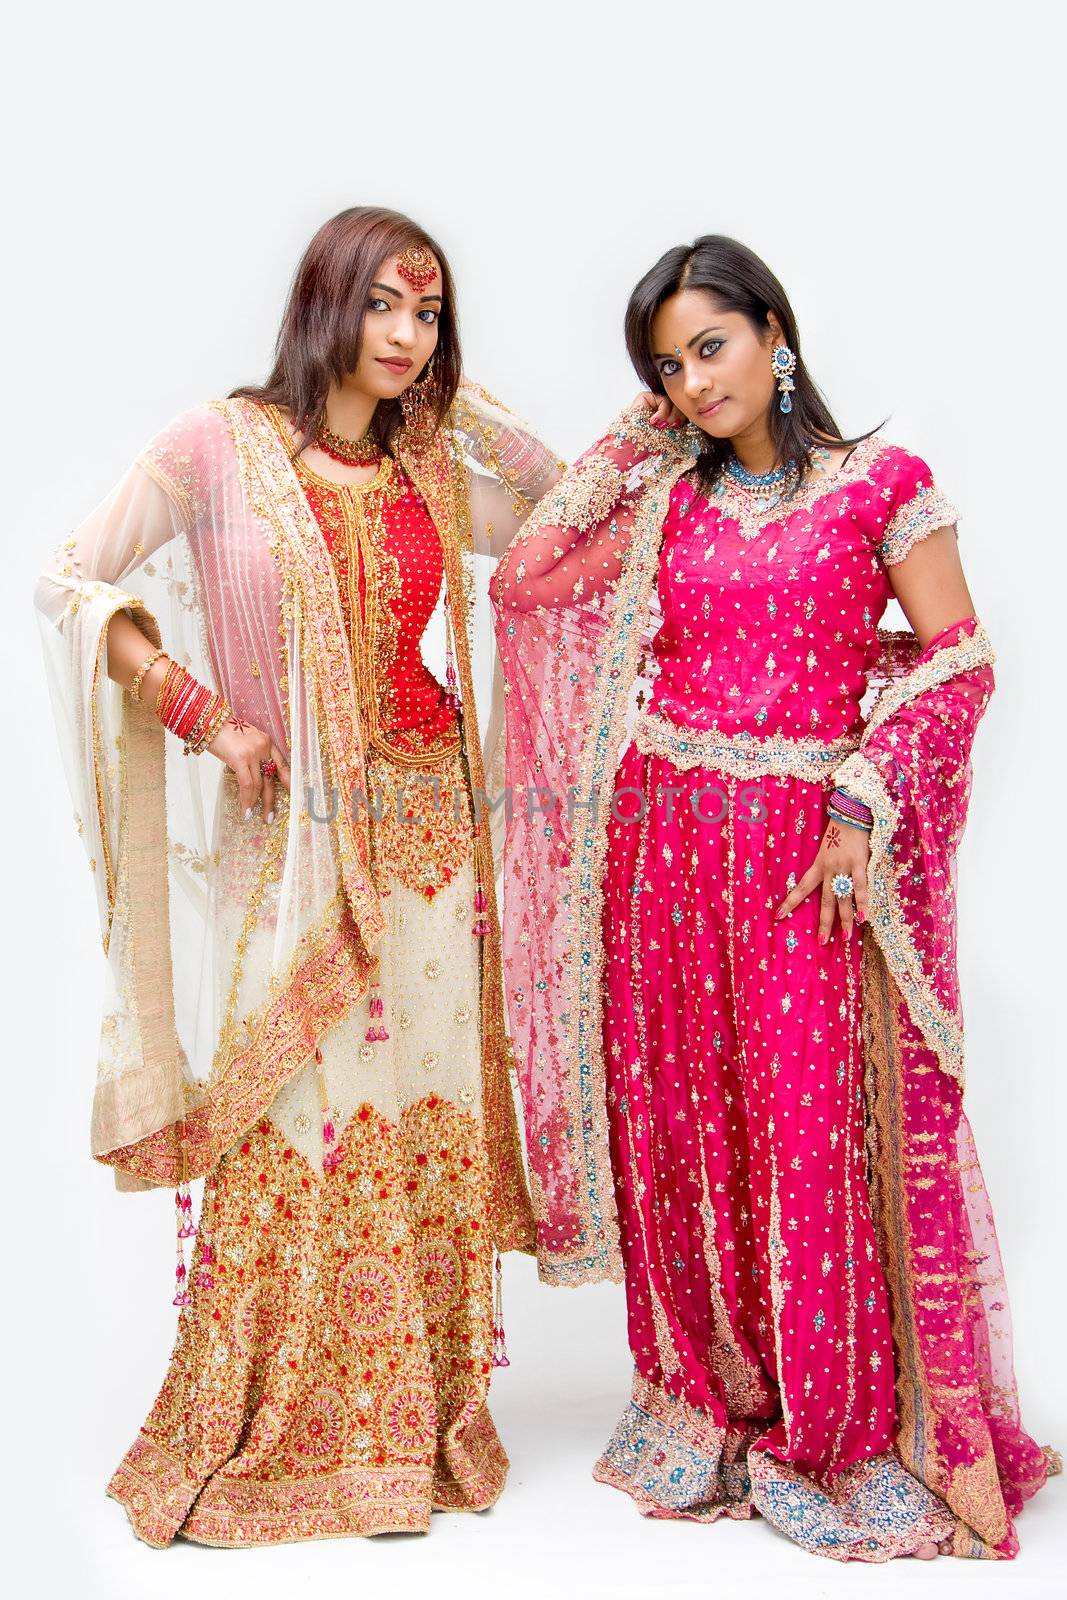 Bangali brides by phakimata